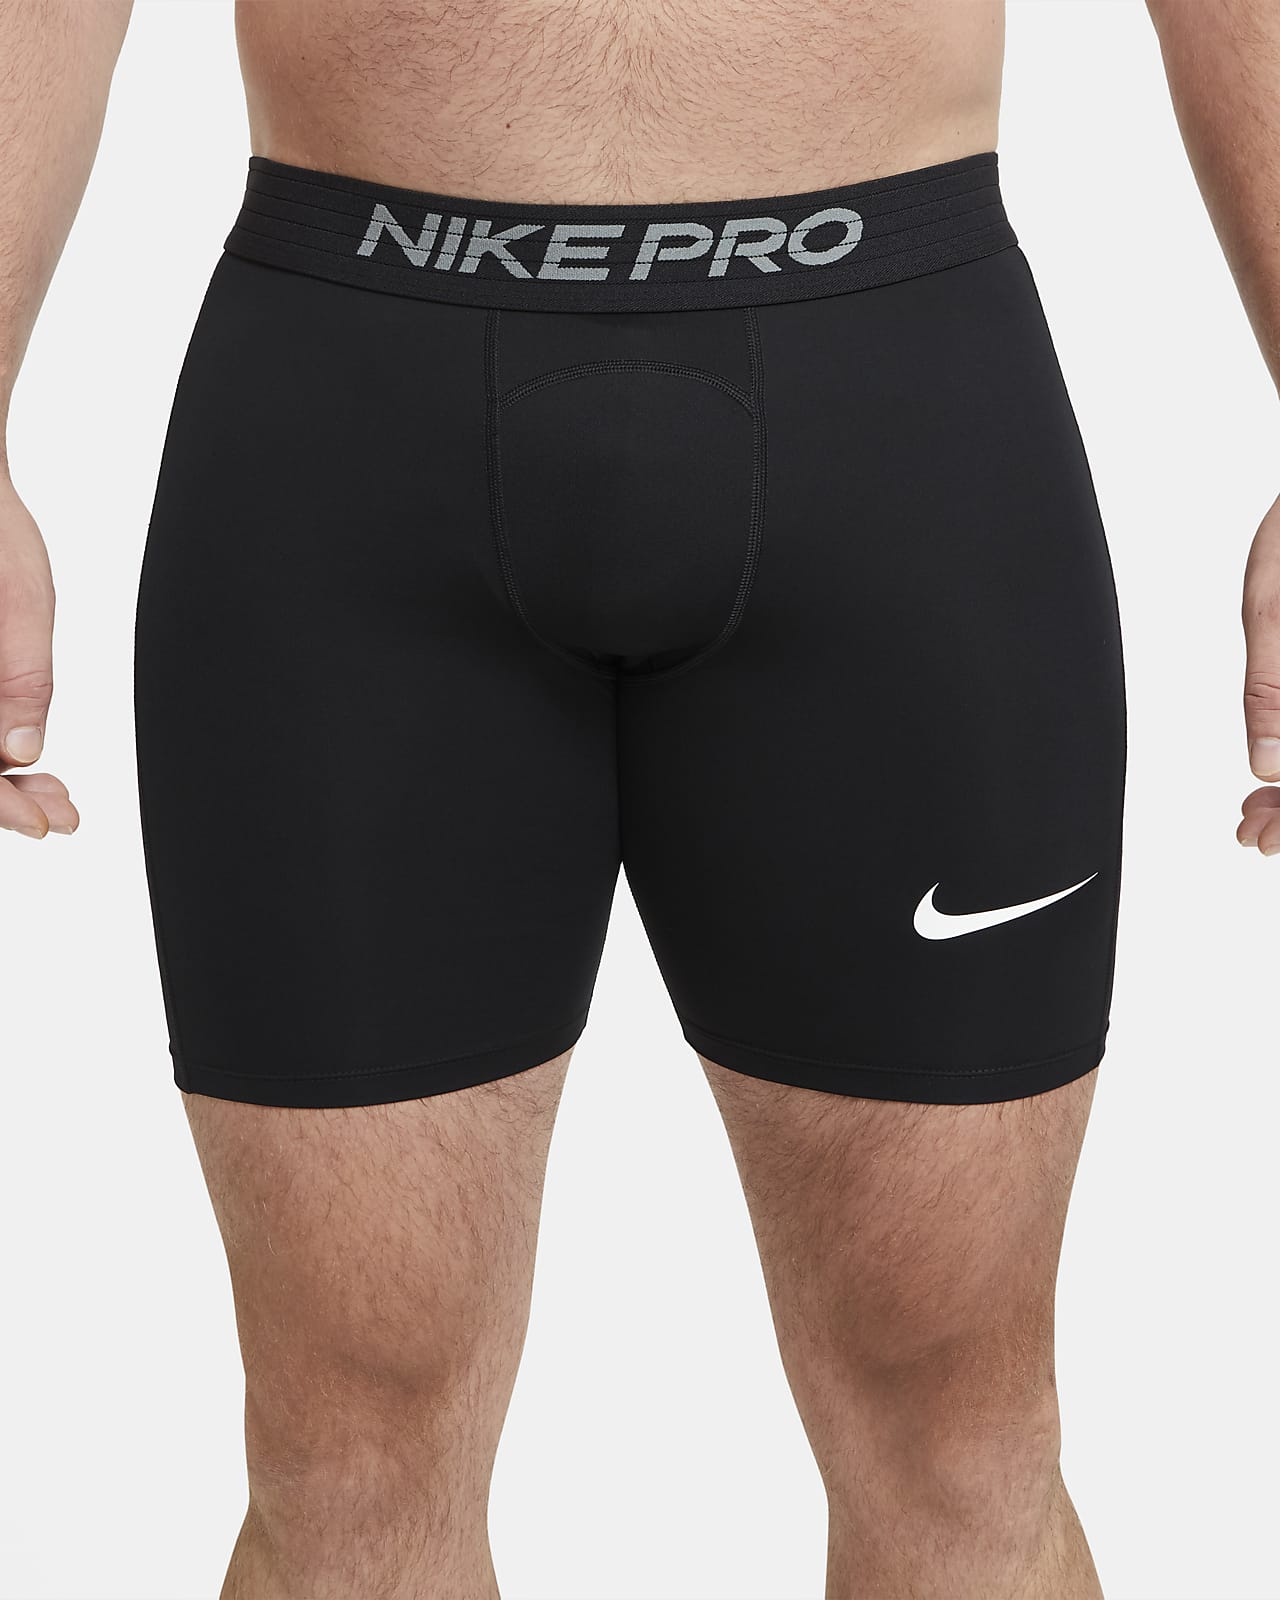 nike pro training shorts men